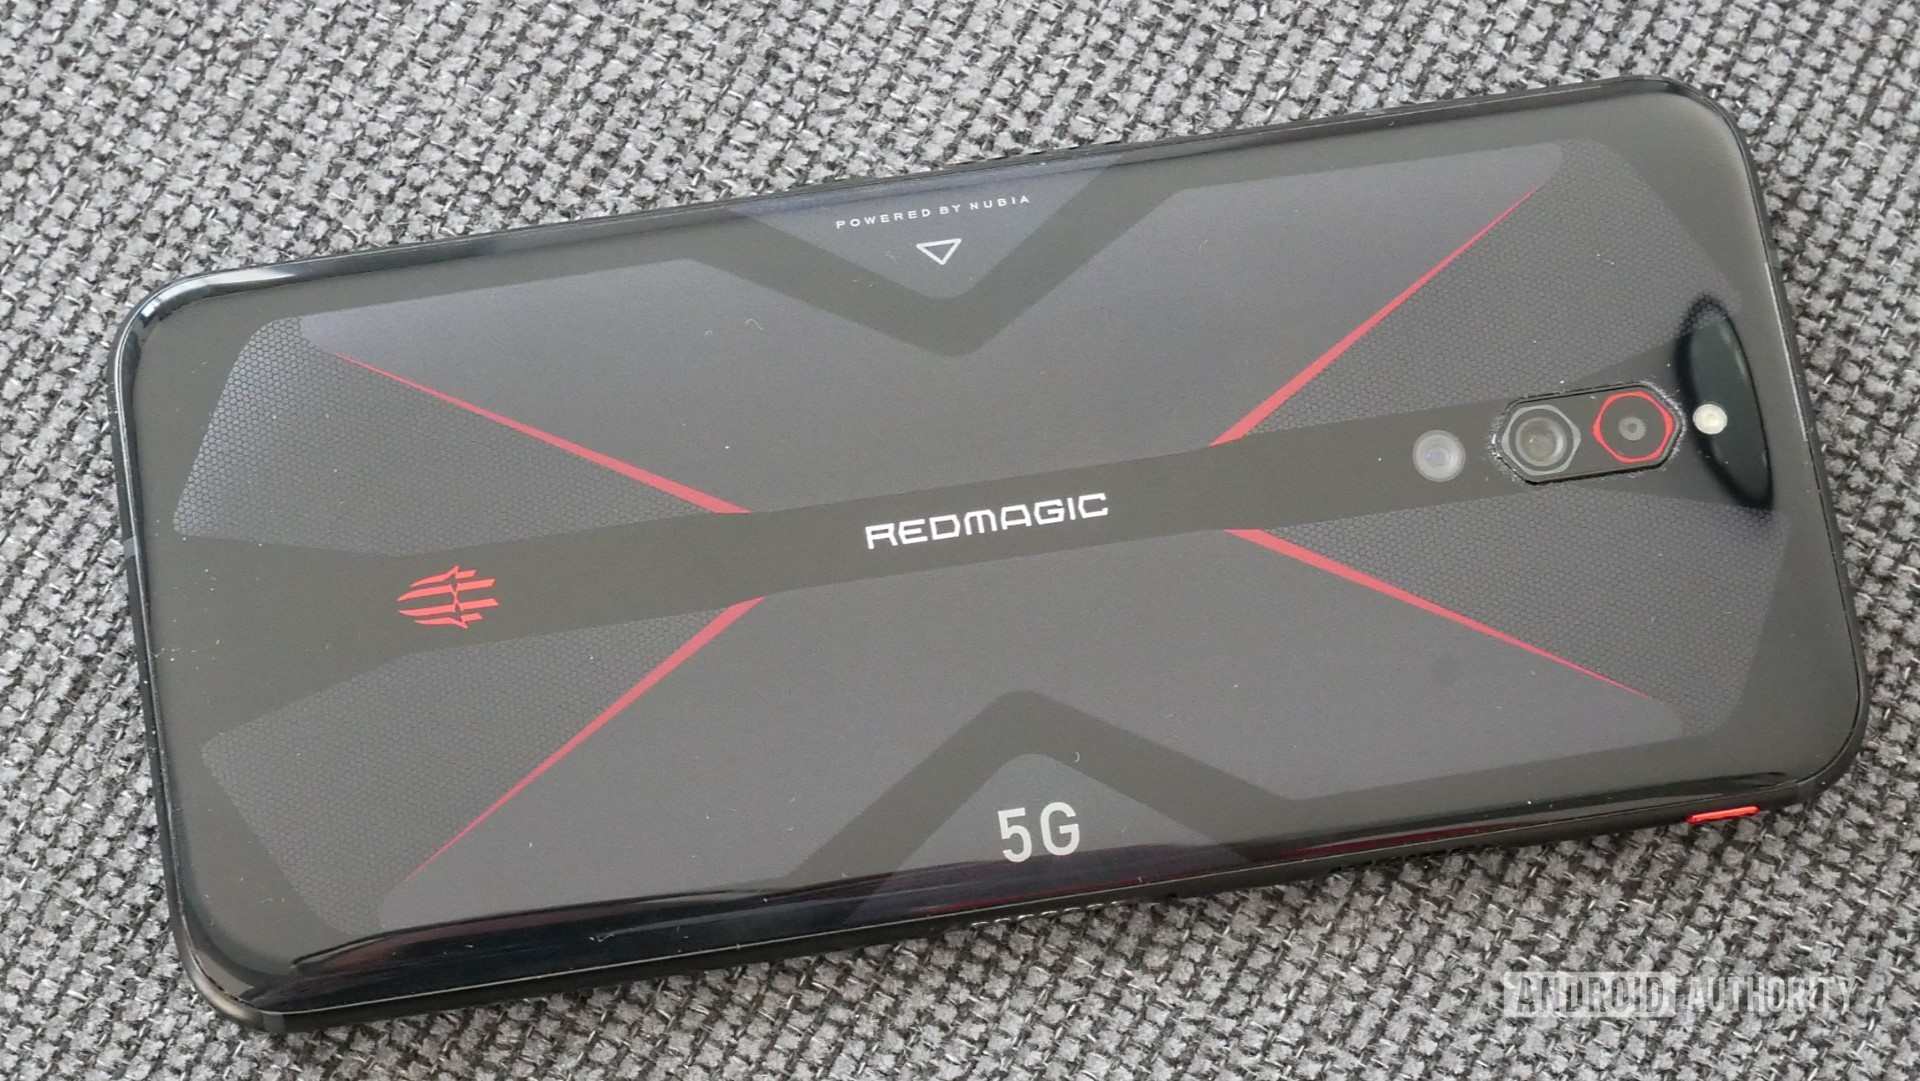 Redmagic 5G 24背面灰色背景 - 最好的Snapdragon 865手机